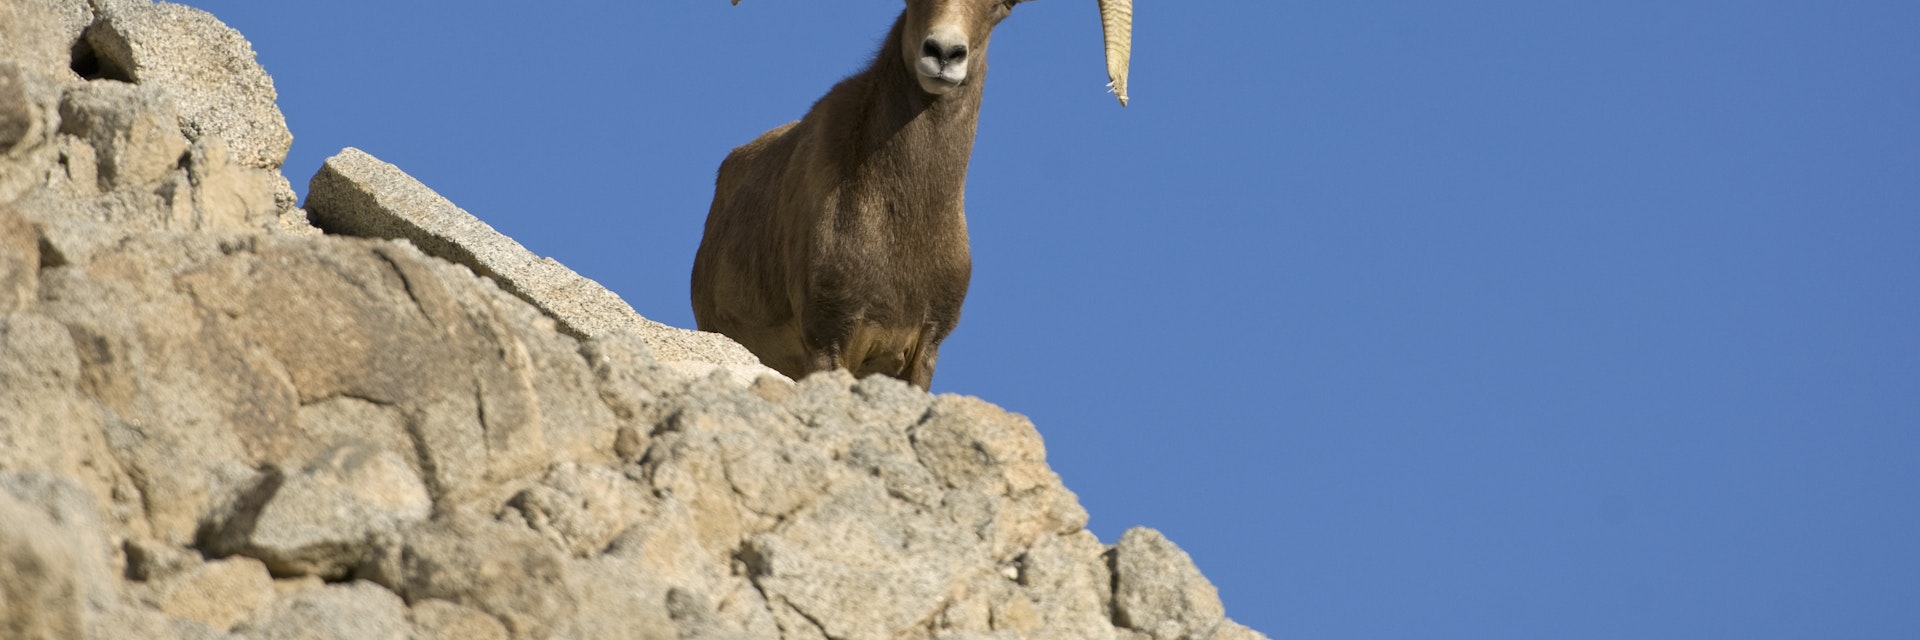 Bighorn sheep (Ovis canadensis) Captive male on rocks, Living Desert Zoo, Palm Desert, California, USA